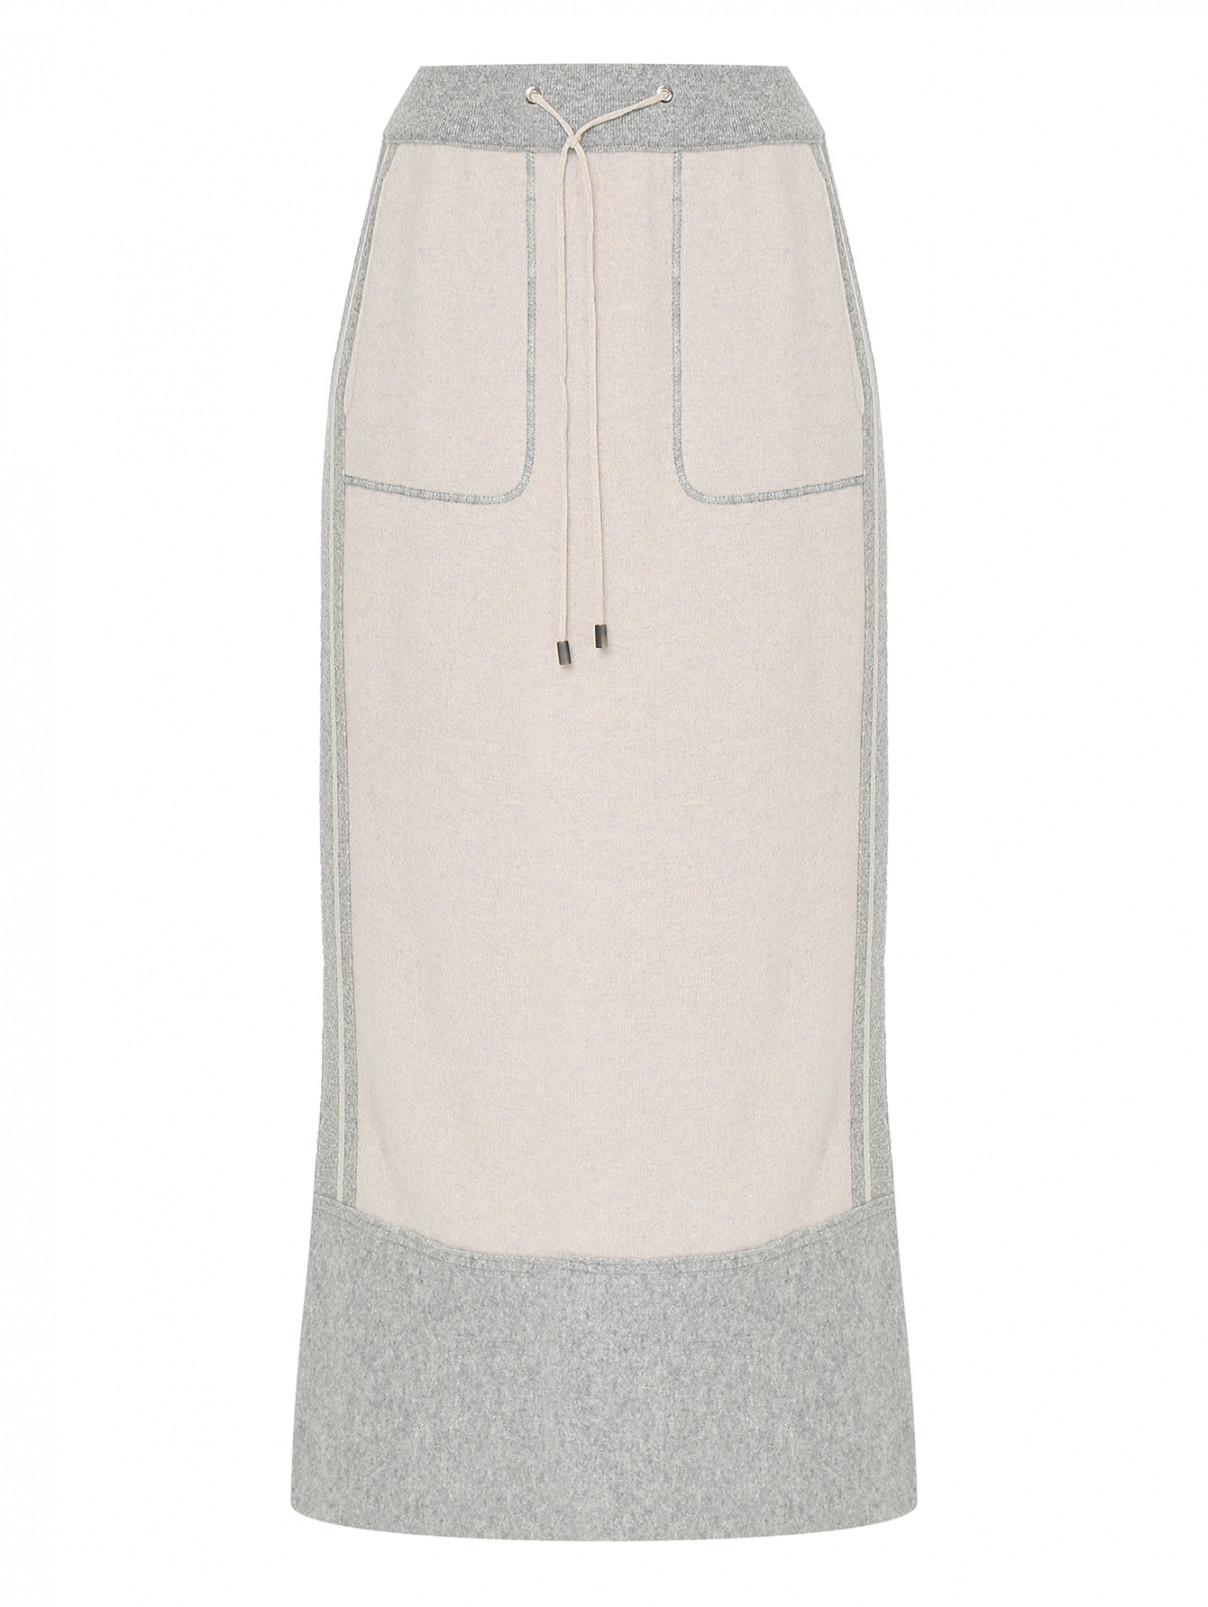 Шерстяная юбка на резинке Bruno Manetti  –  Общий вид  – Цвет:  Серый